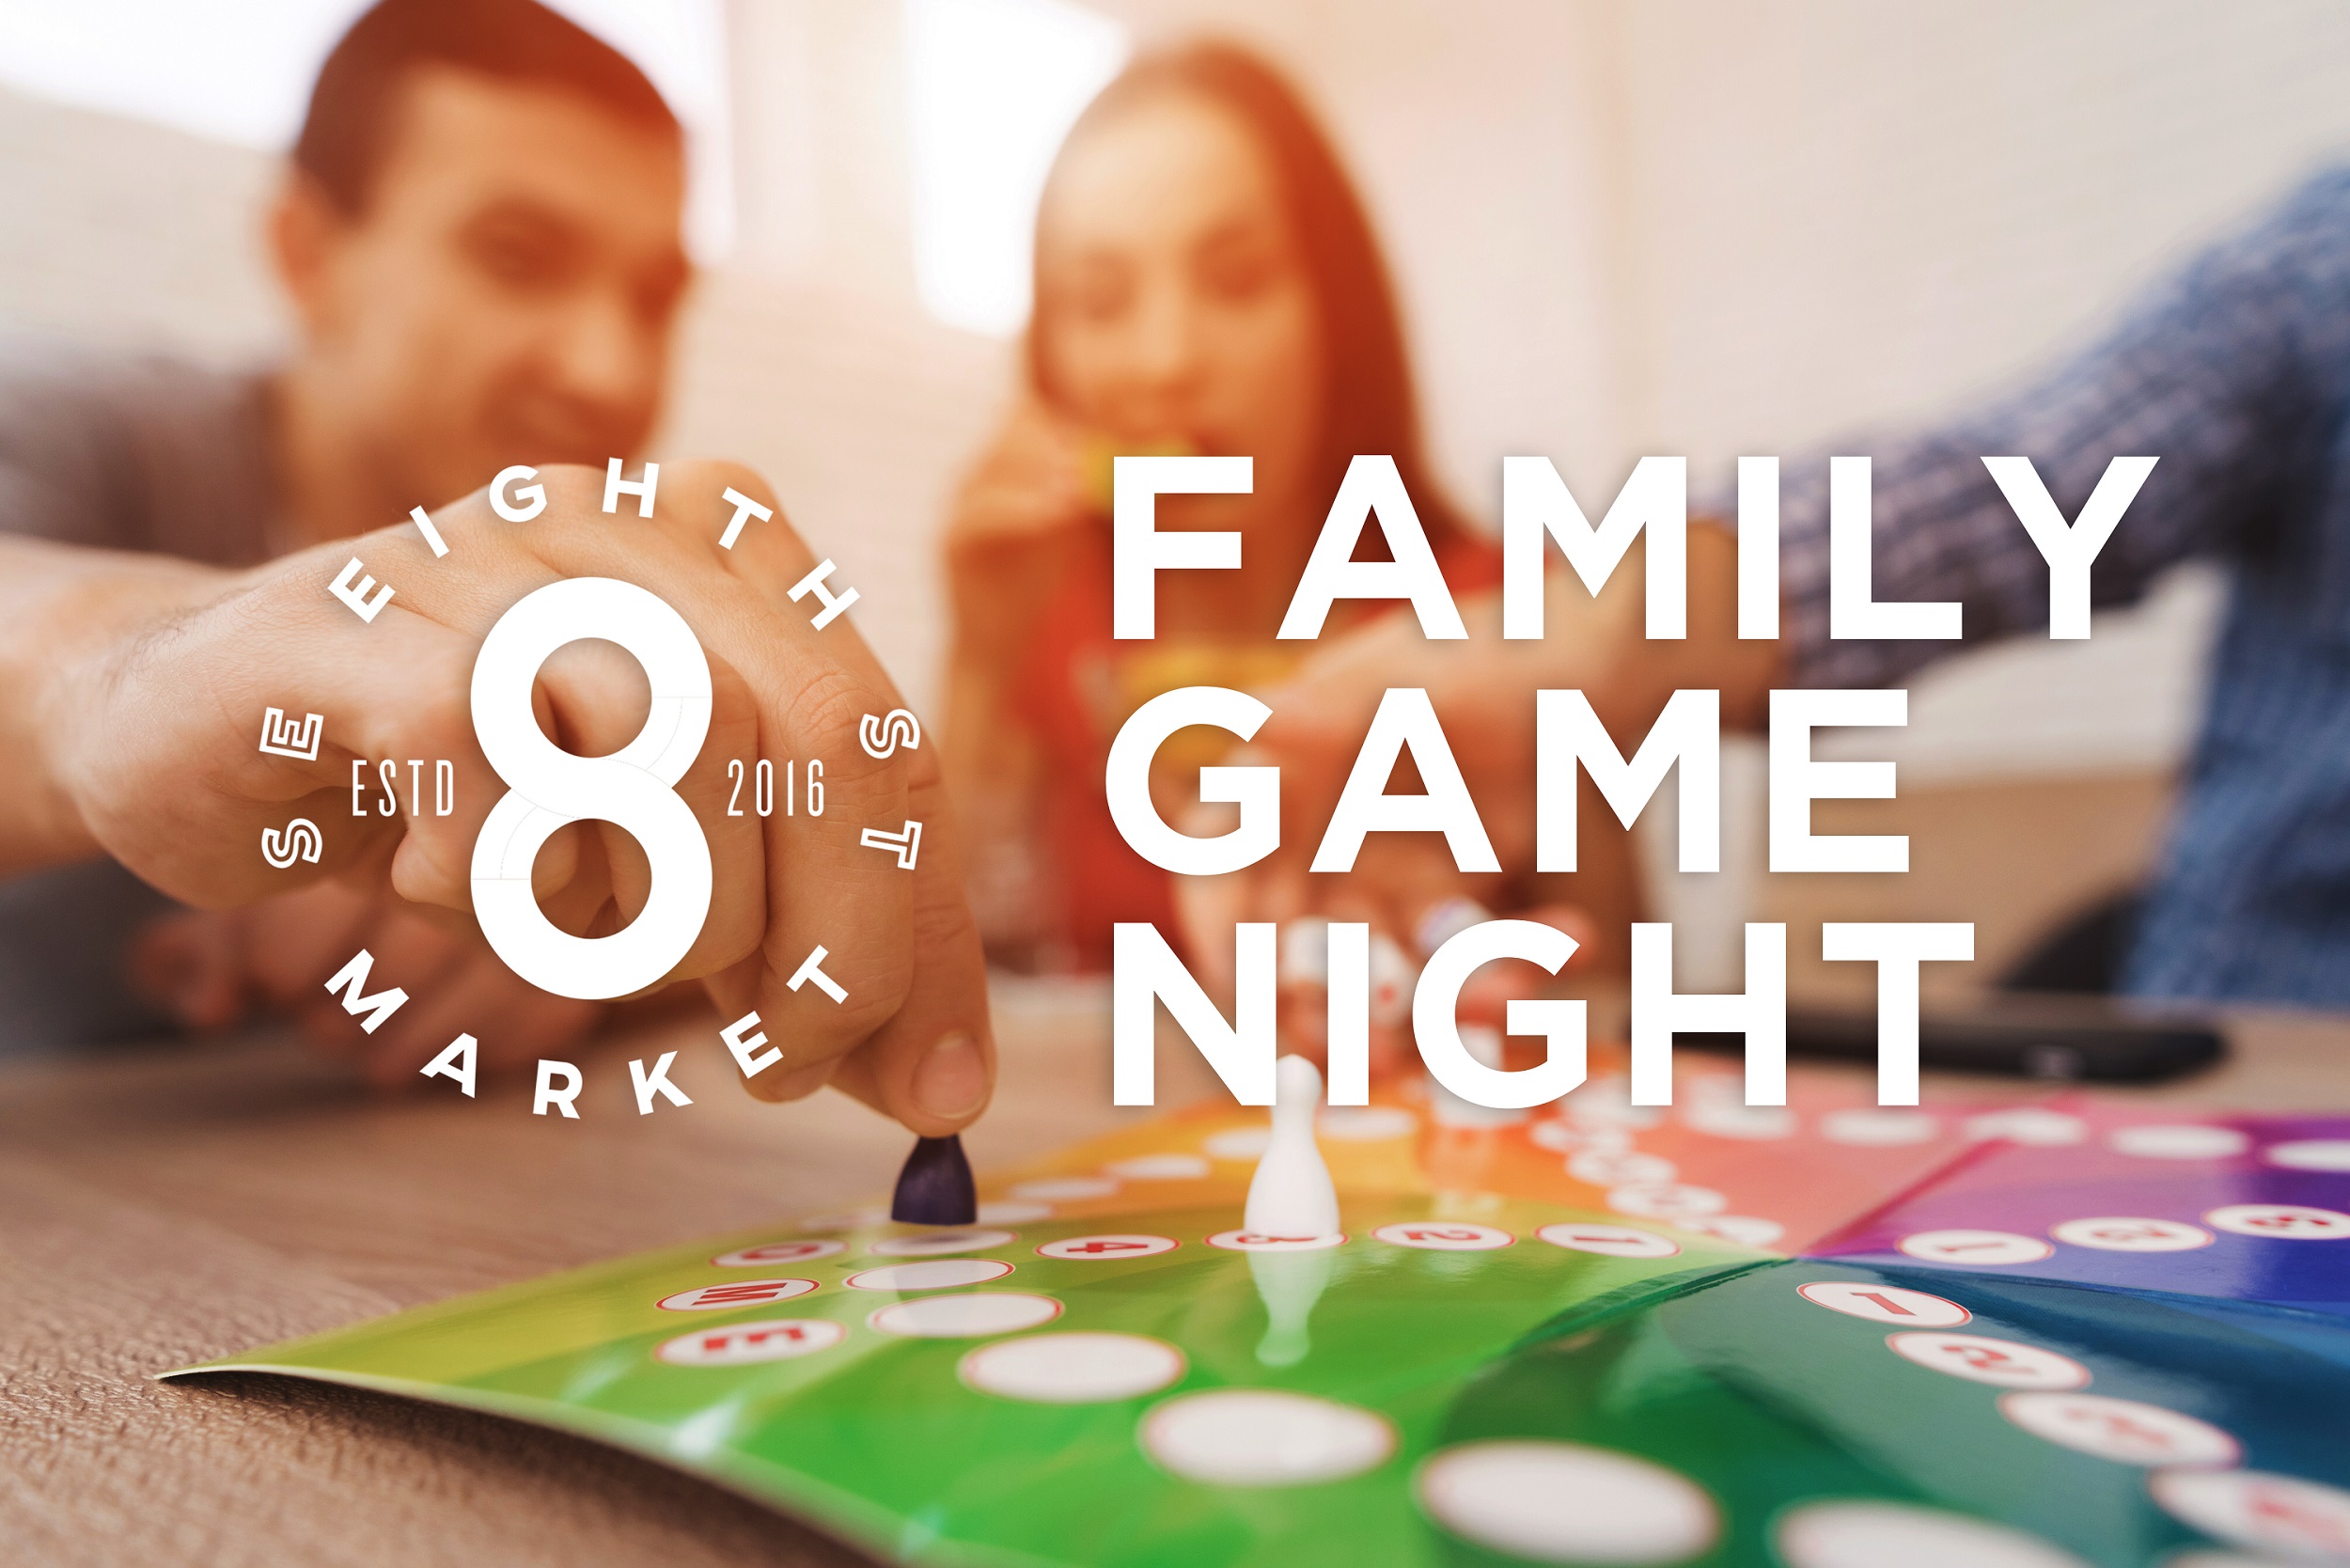 8th street market family game night